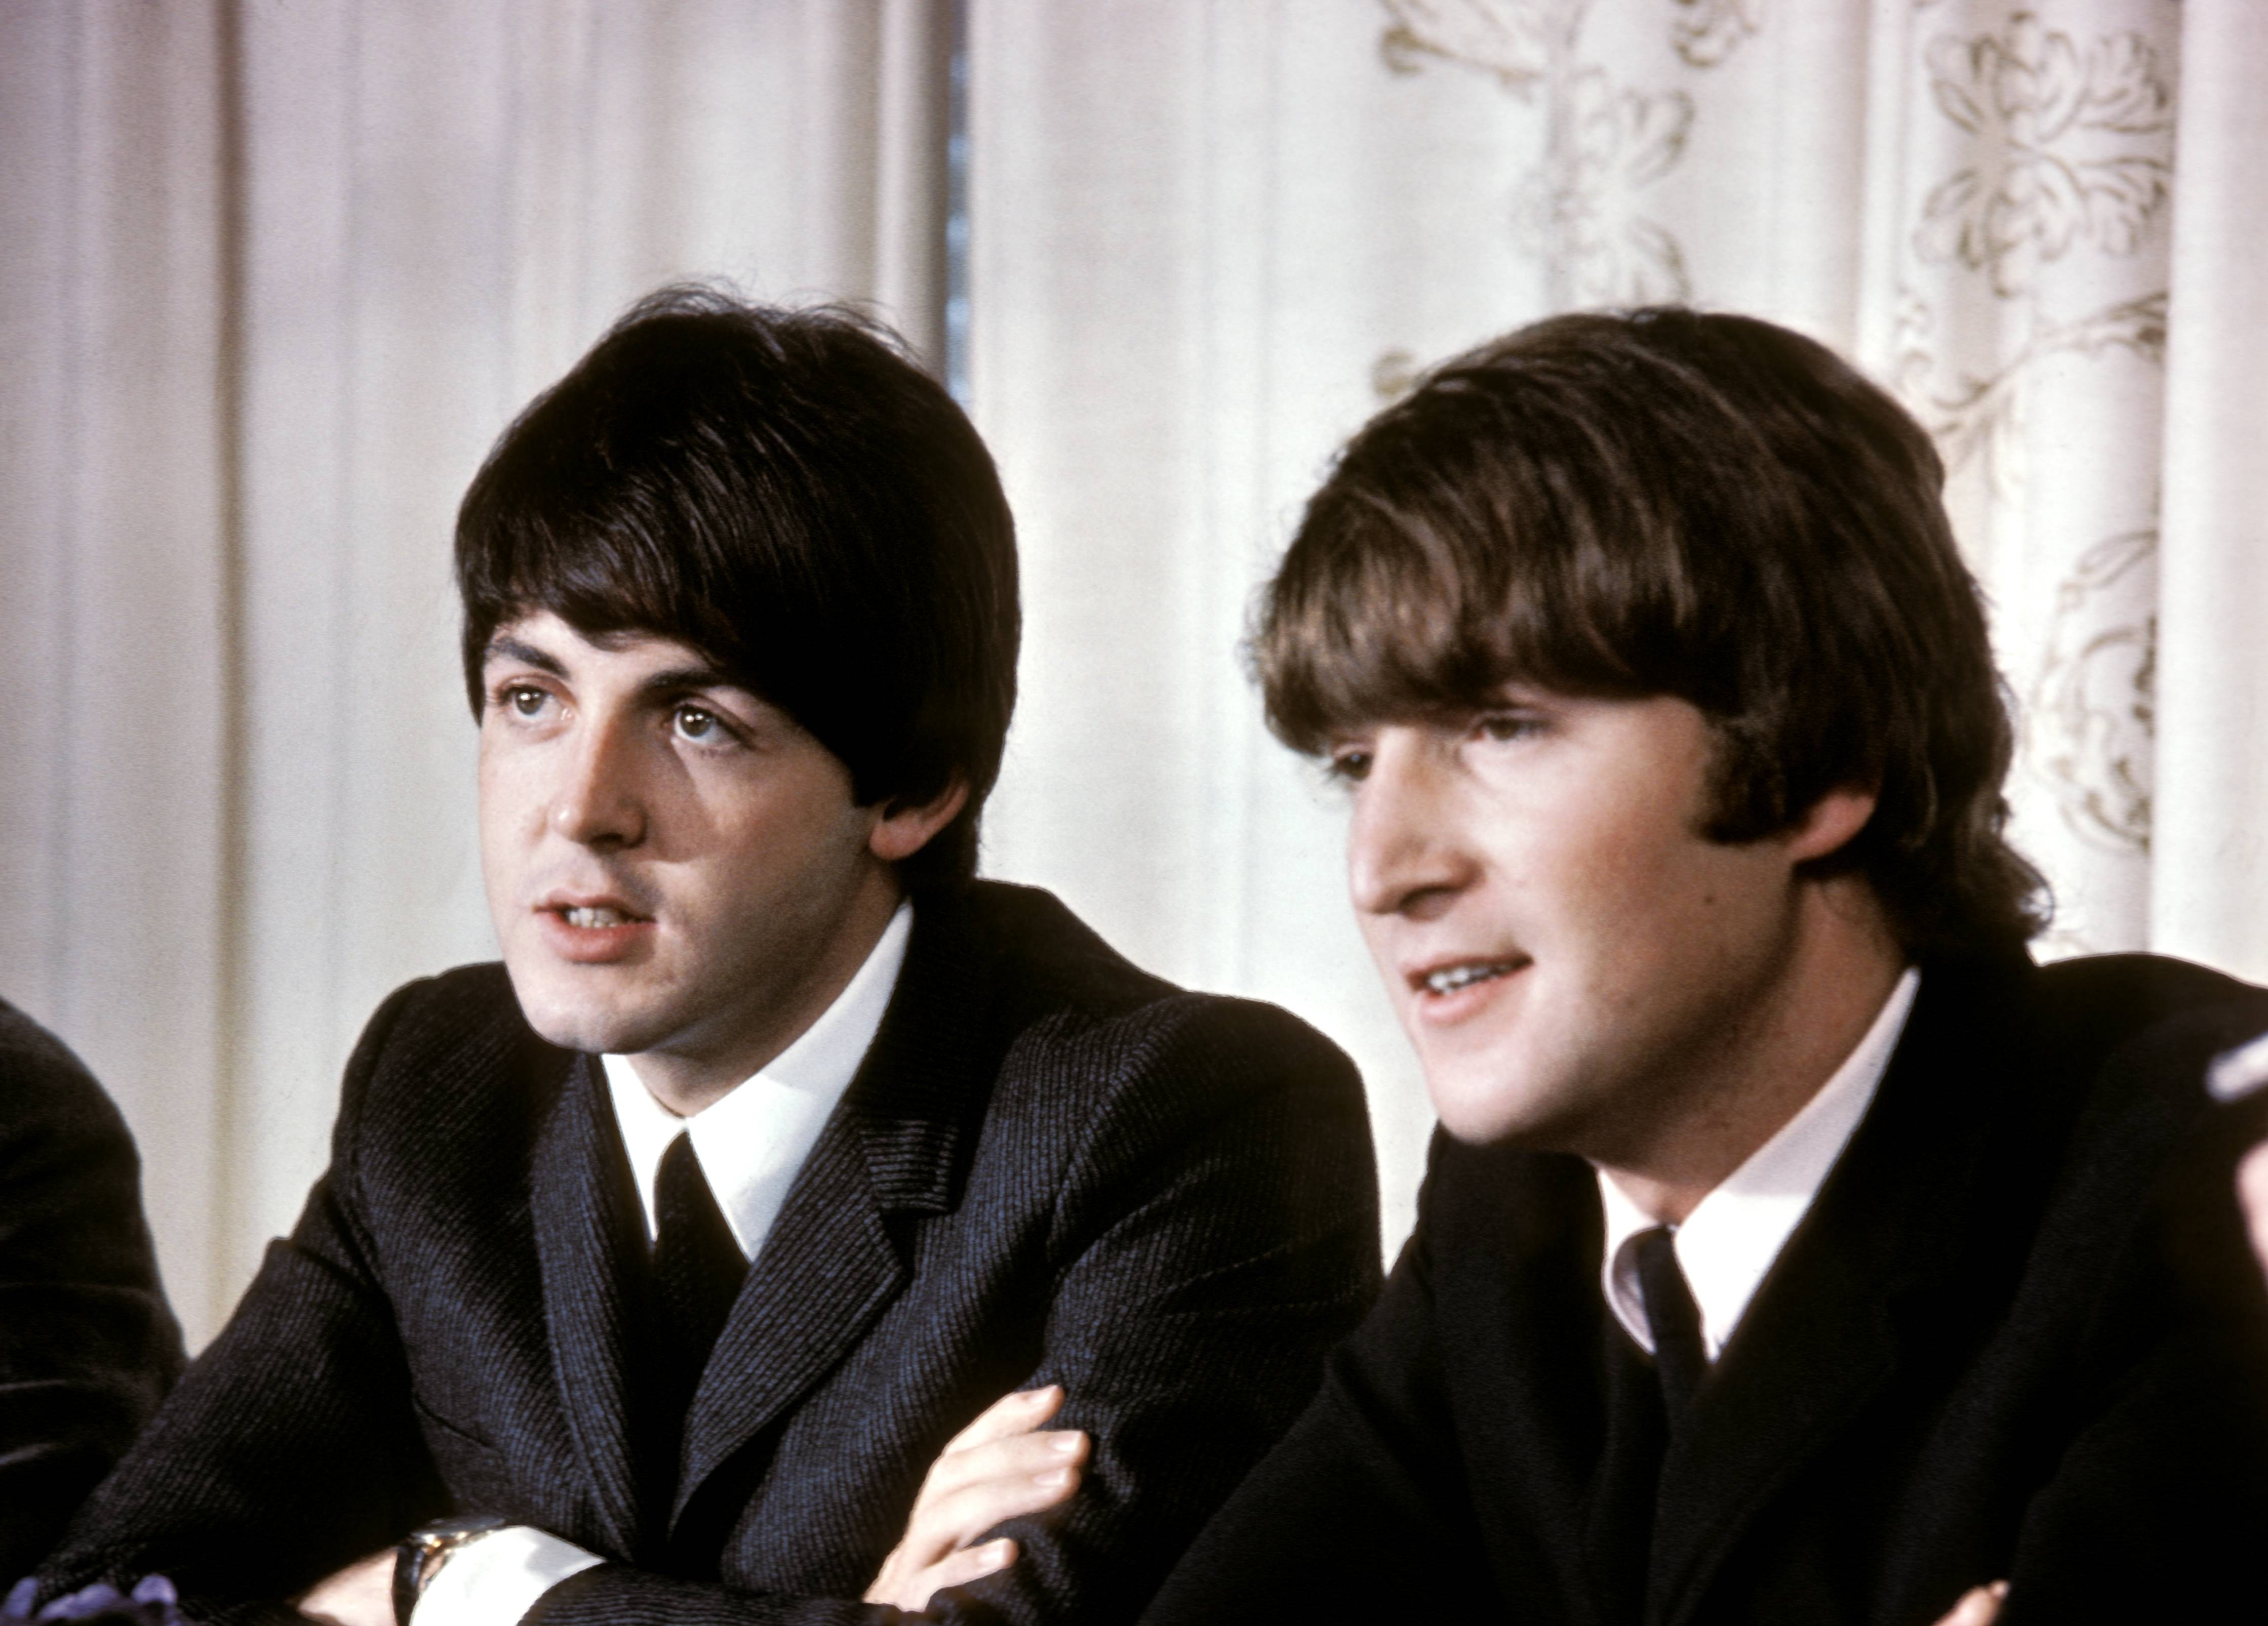 The Beatles Legend John Lennon Wearing Woman Dress Photo Has Been